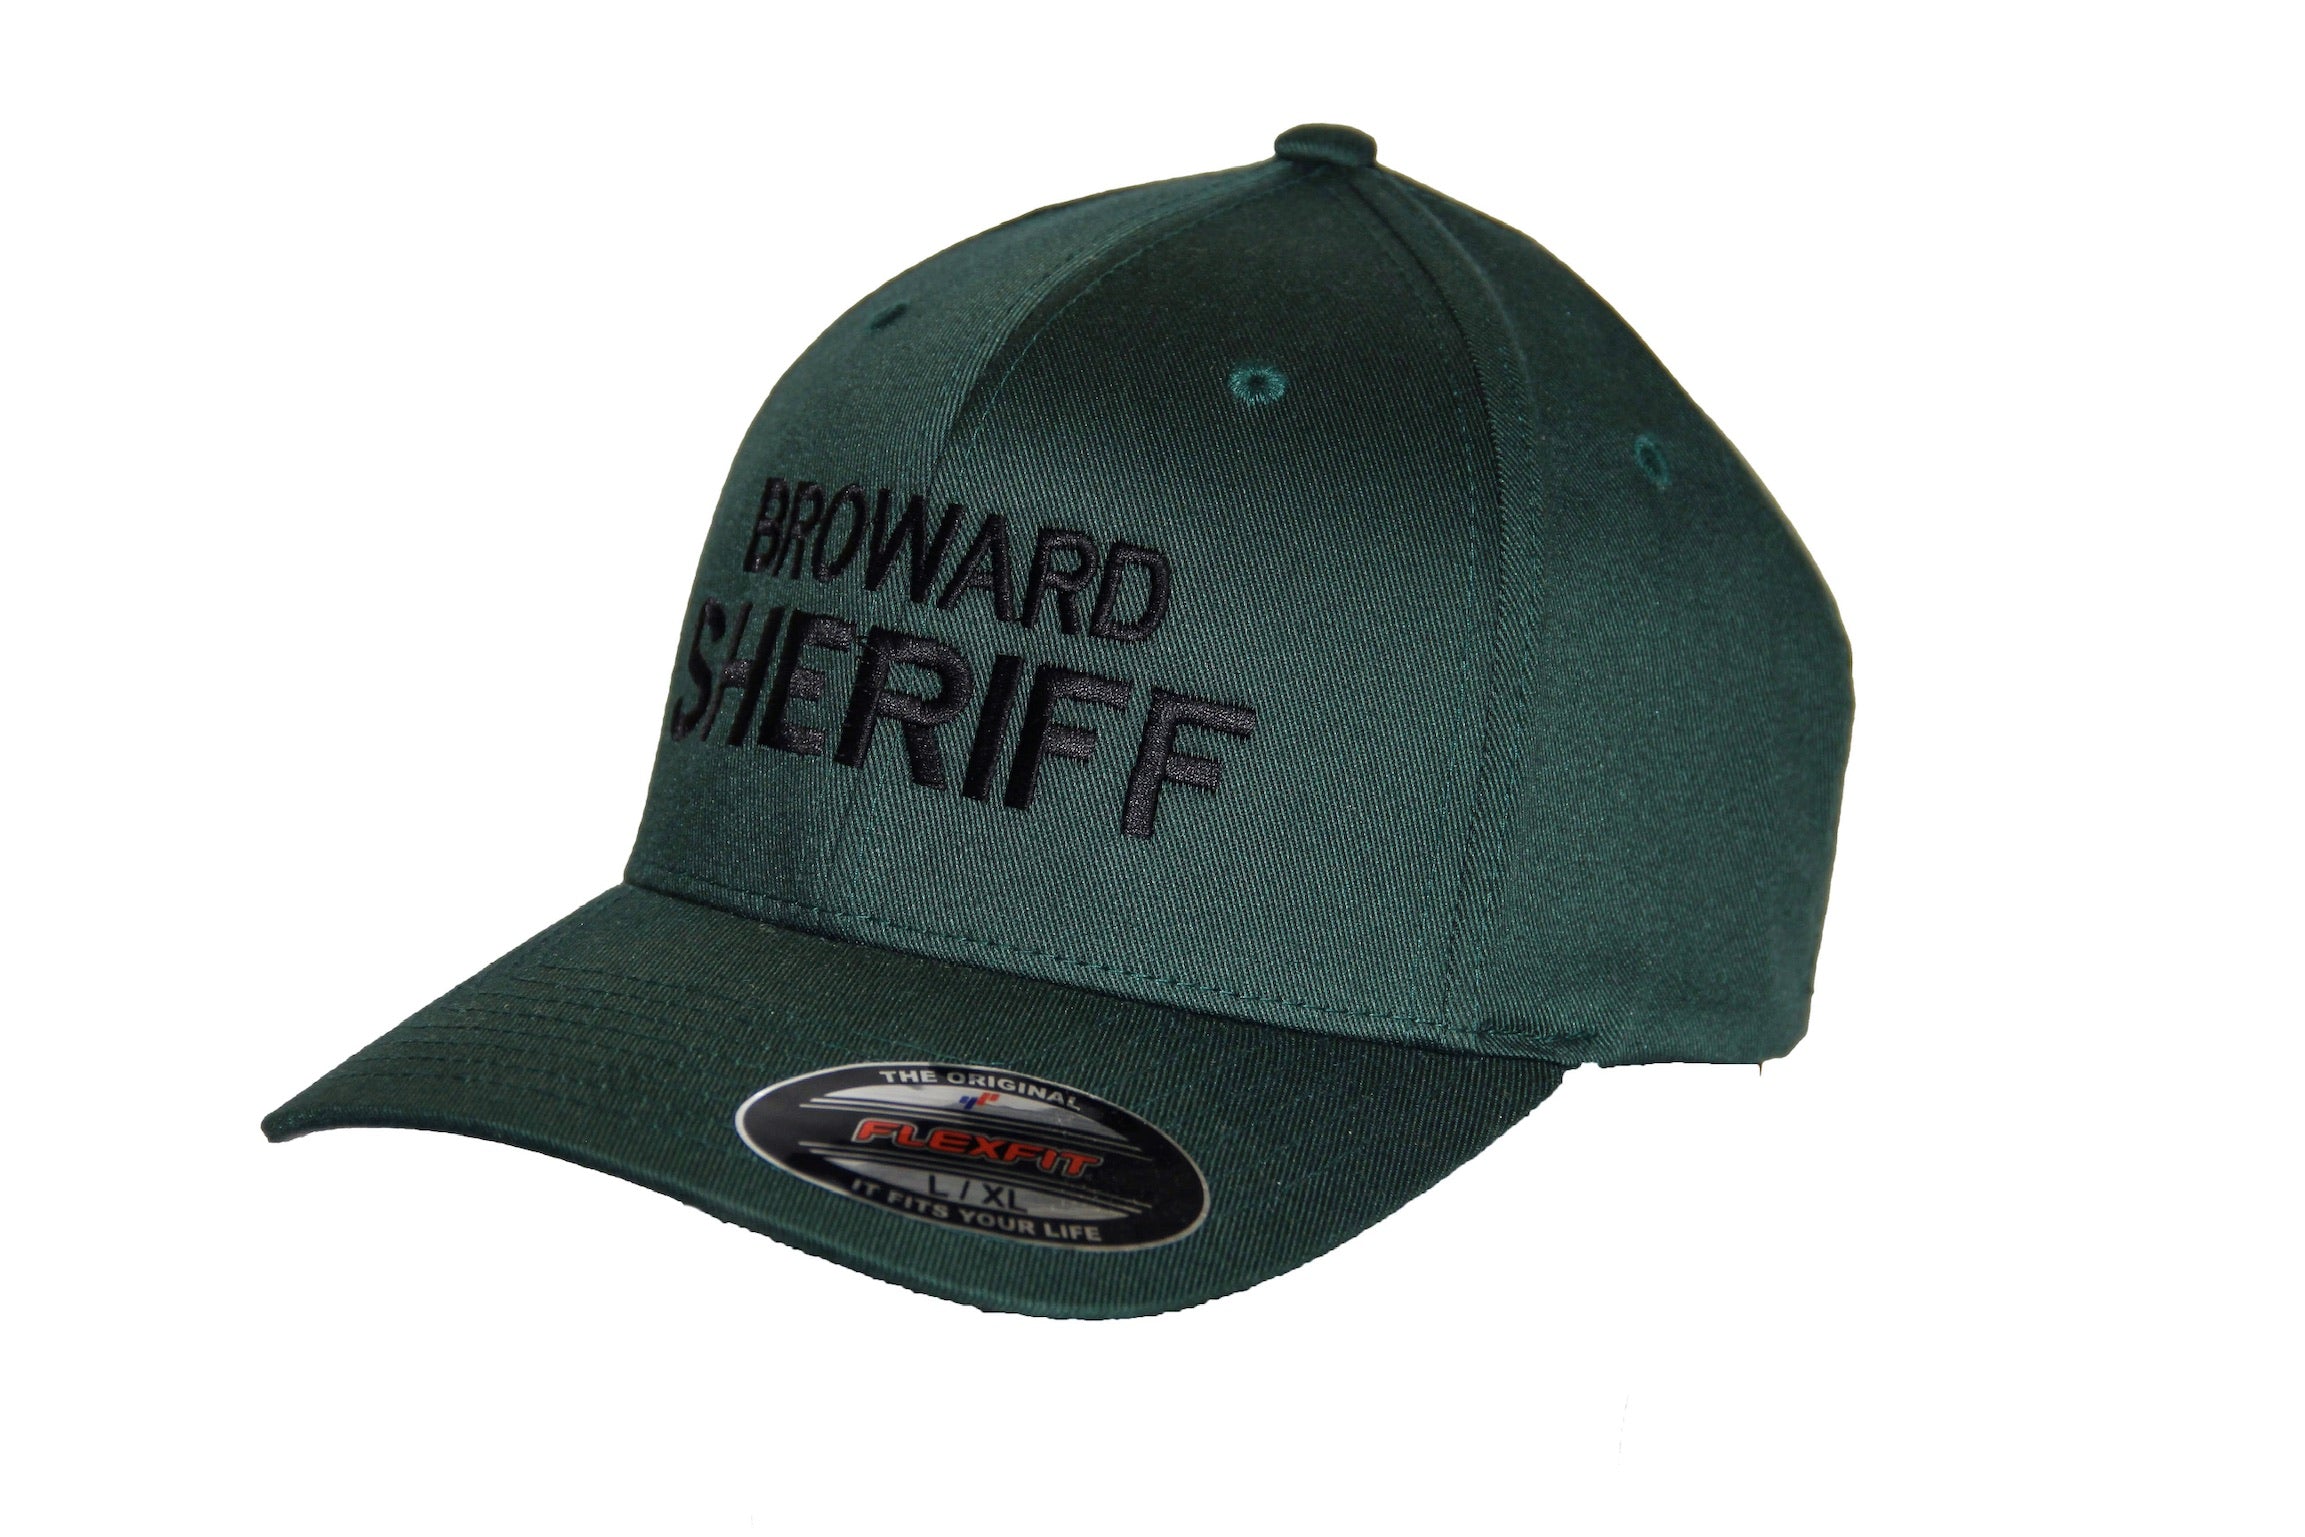 Broward Sheriff Office Flexfit Adult Wooly Cap